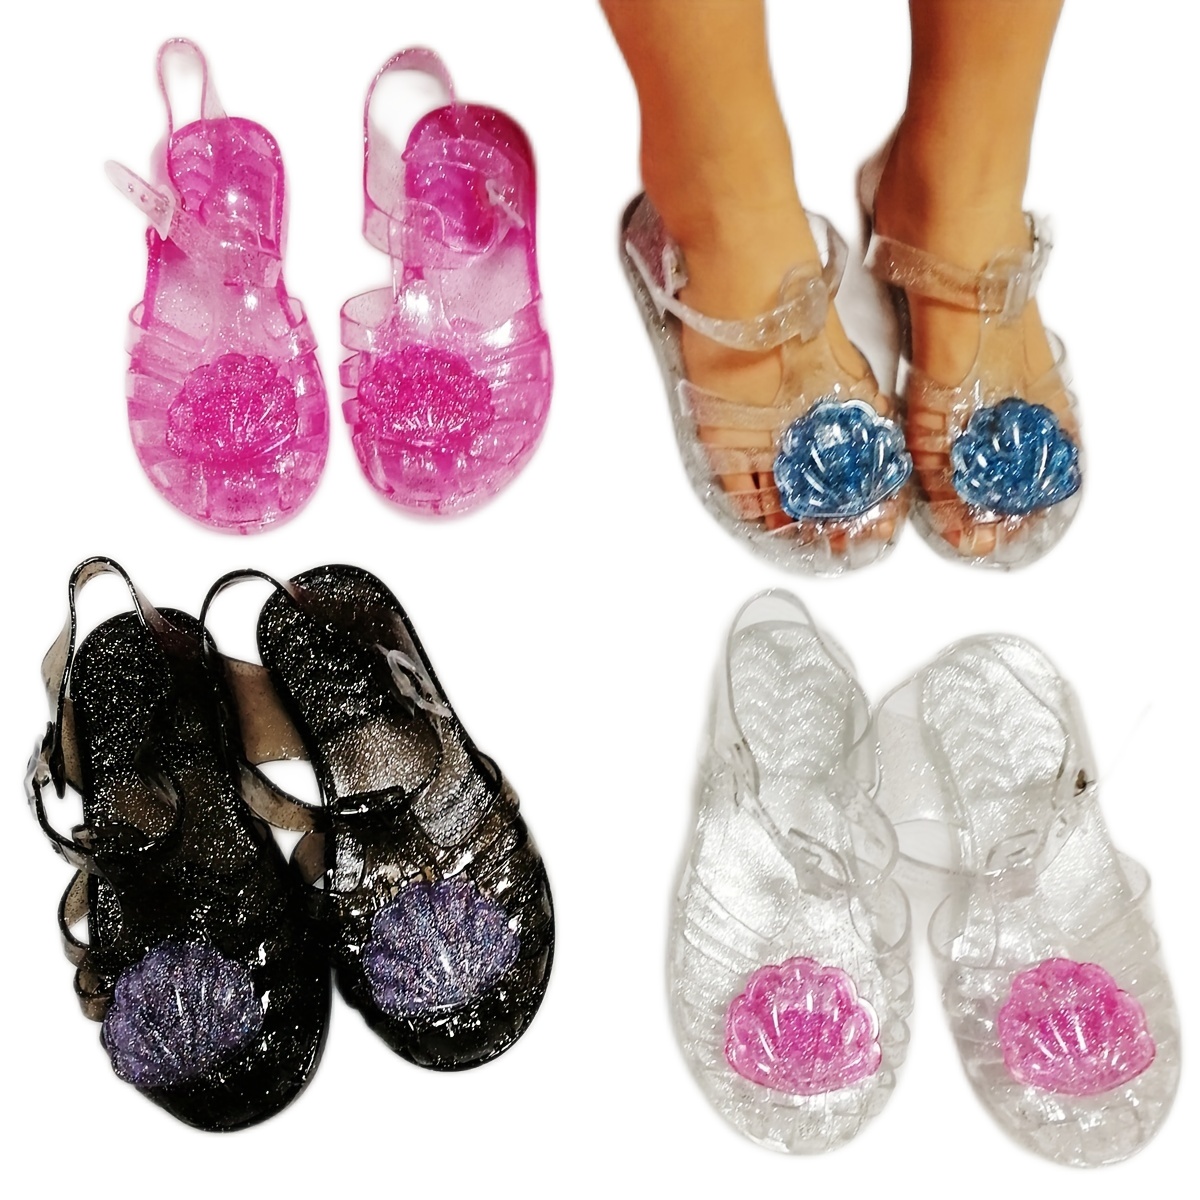 nsendm Female Sandal Little Kid Toddler Jellies Sandals Soft Sole